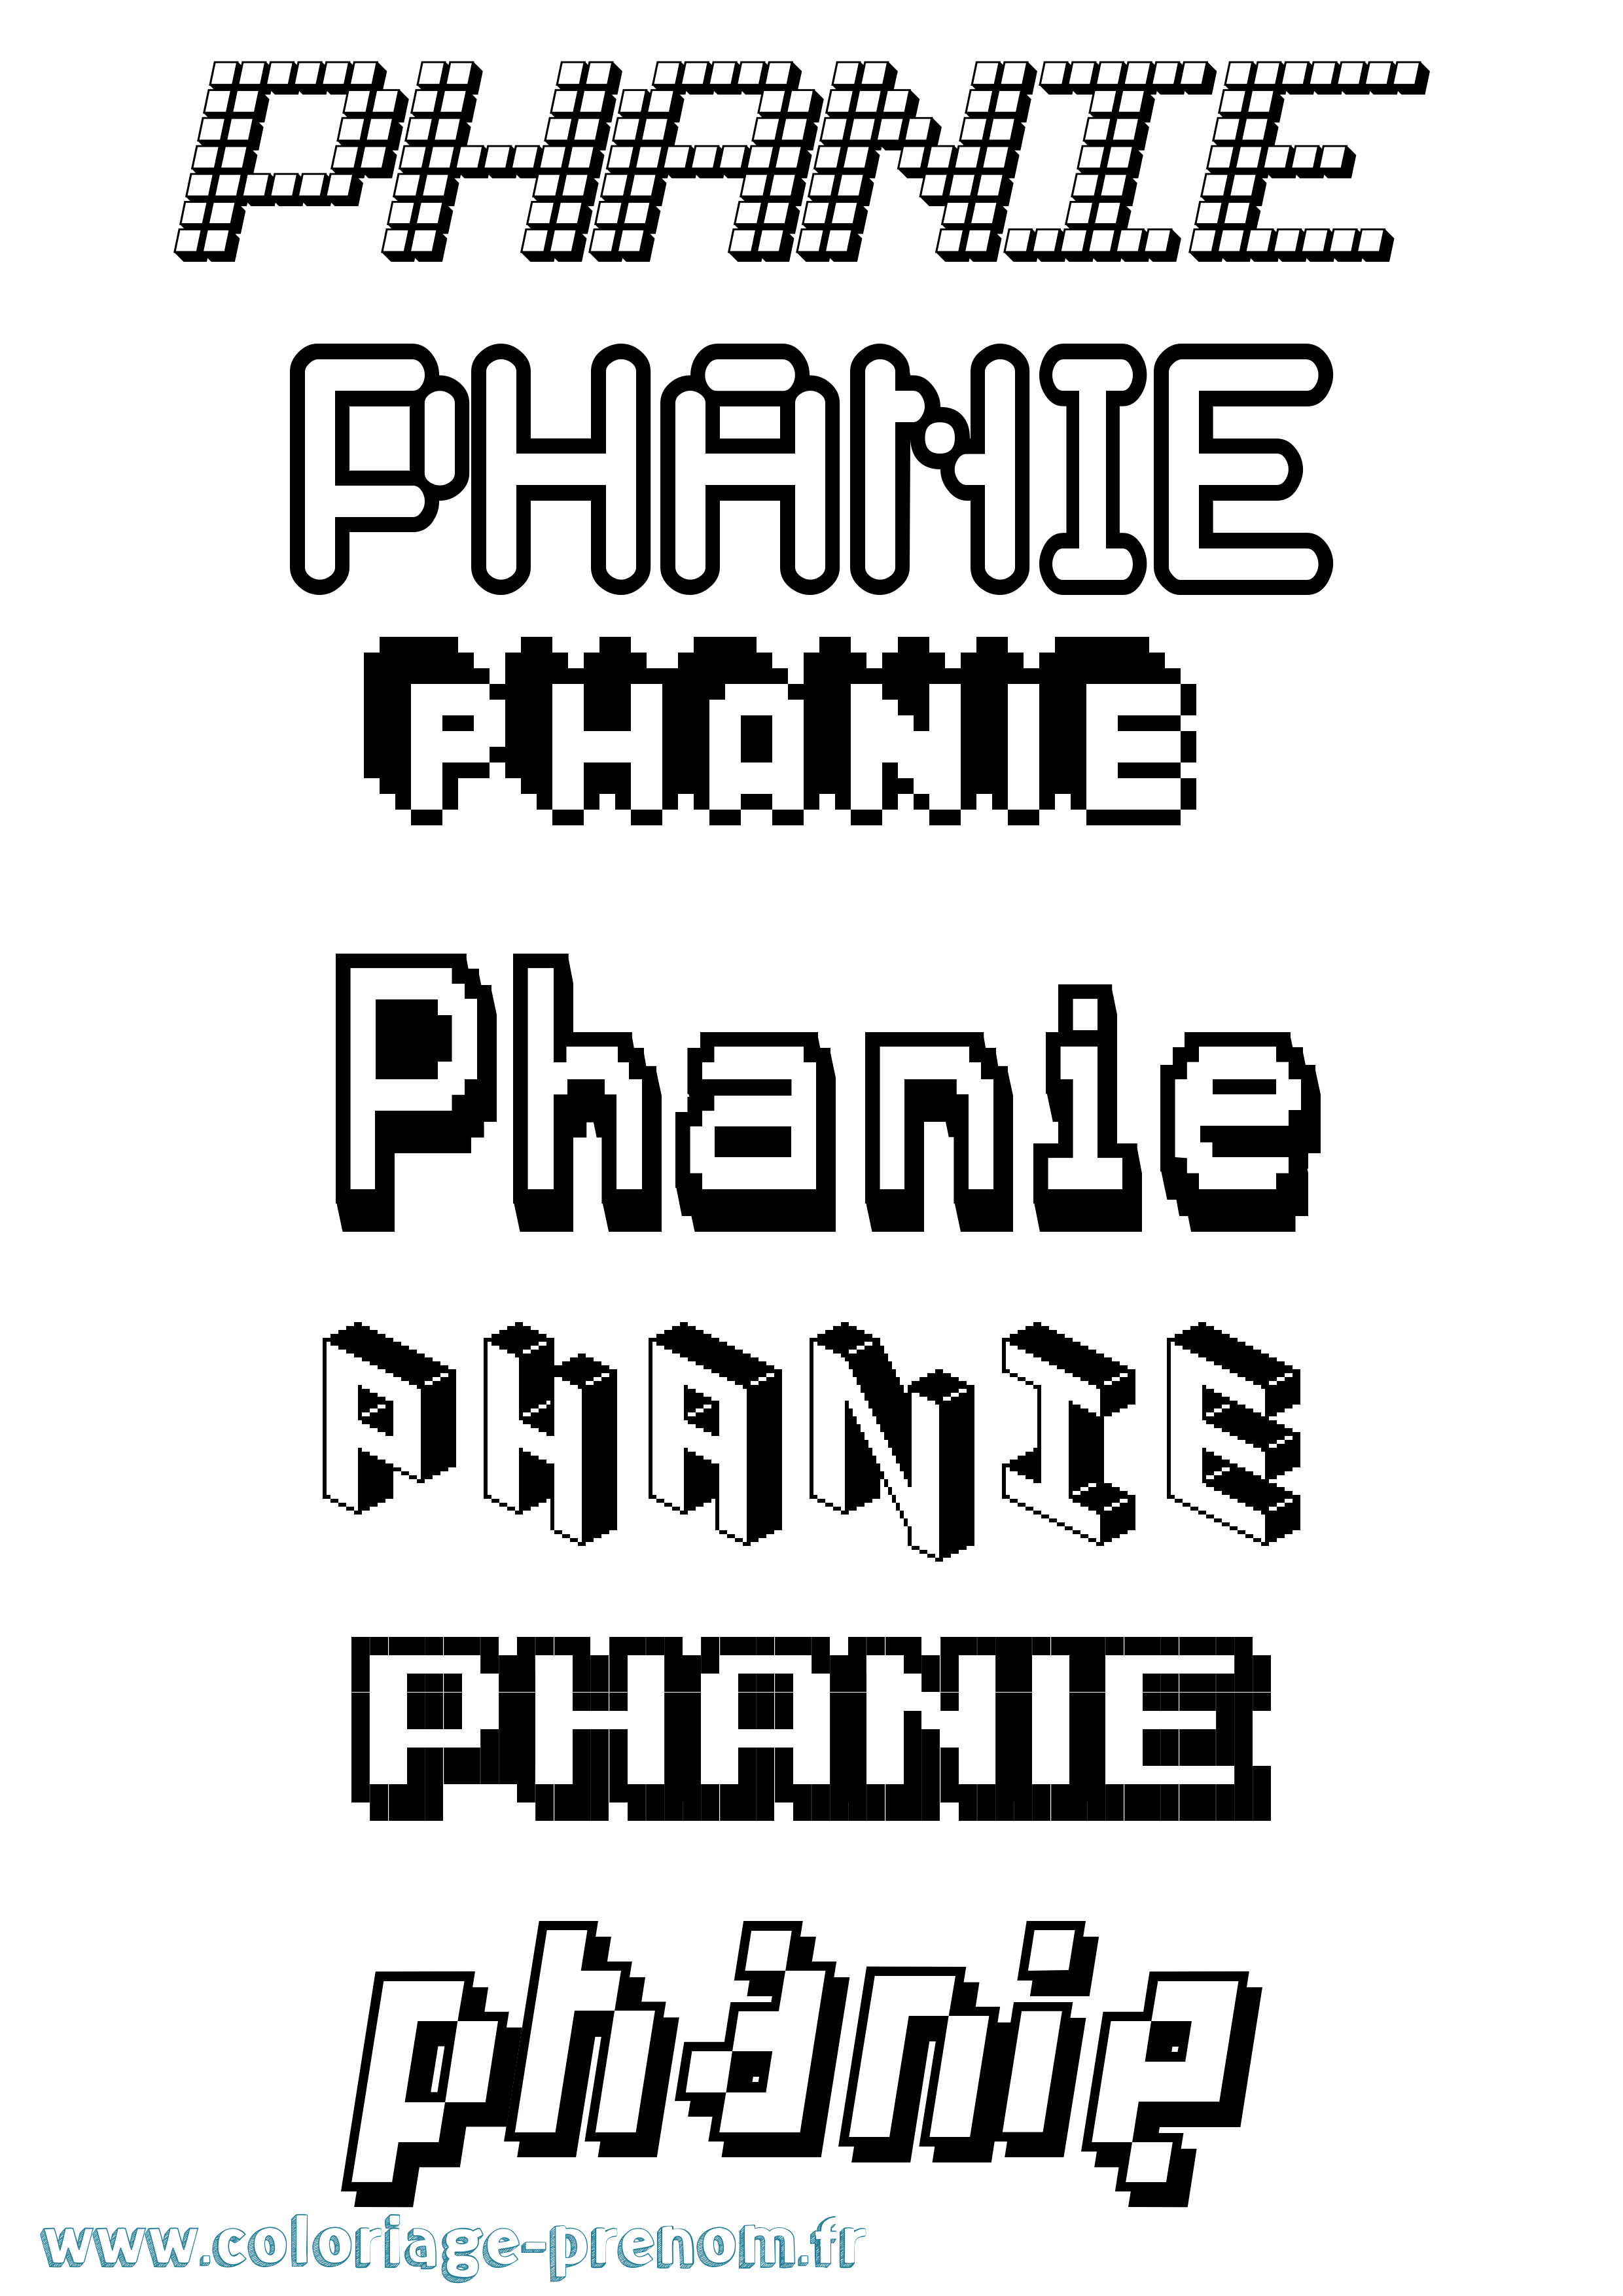 Coloriage prénom Phanie Pixel